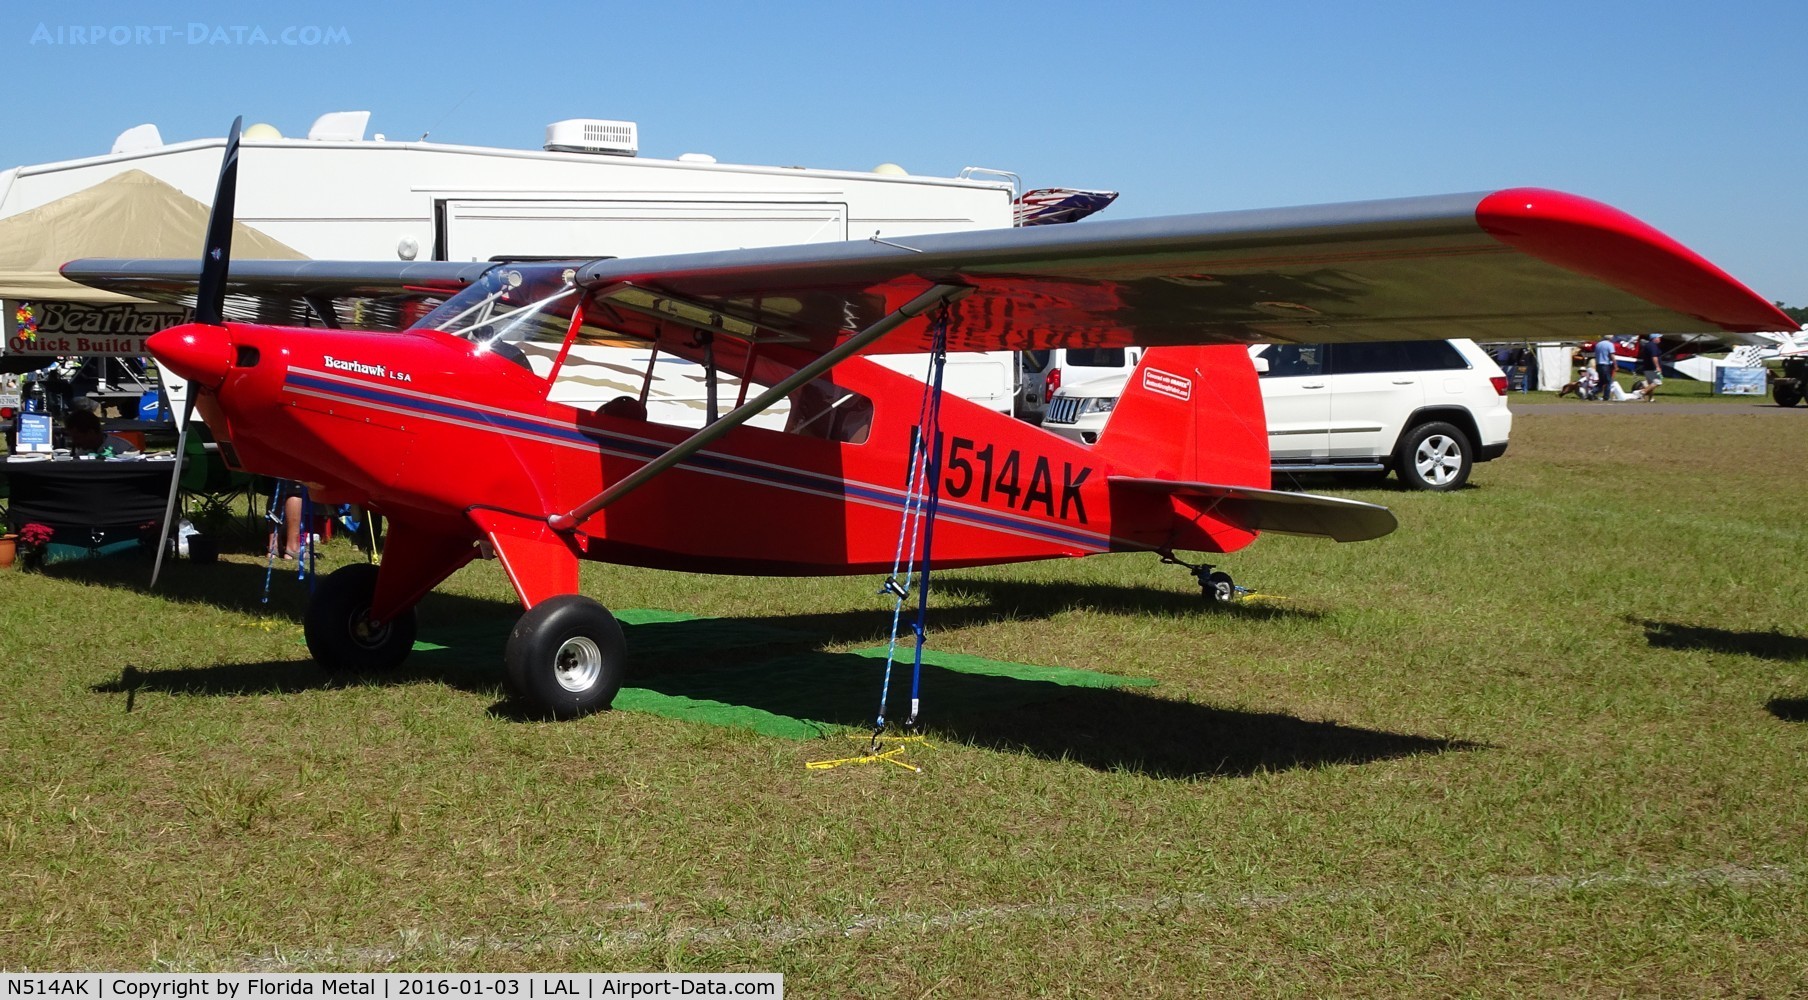 N514AK, 2014 Avipro Bearhawk LSA C/N BHLSA01-001/002, Bearhawk